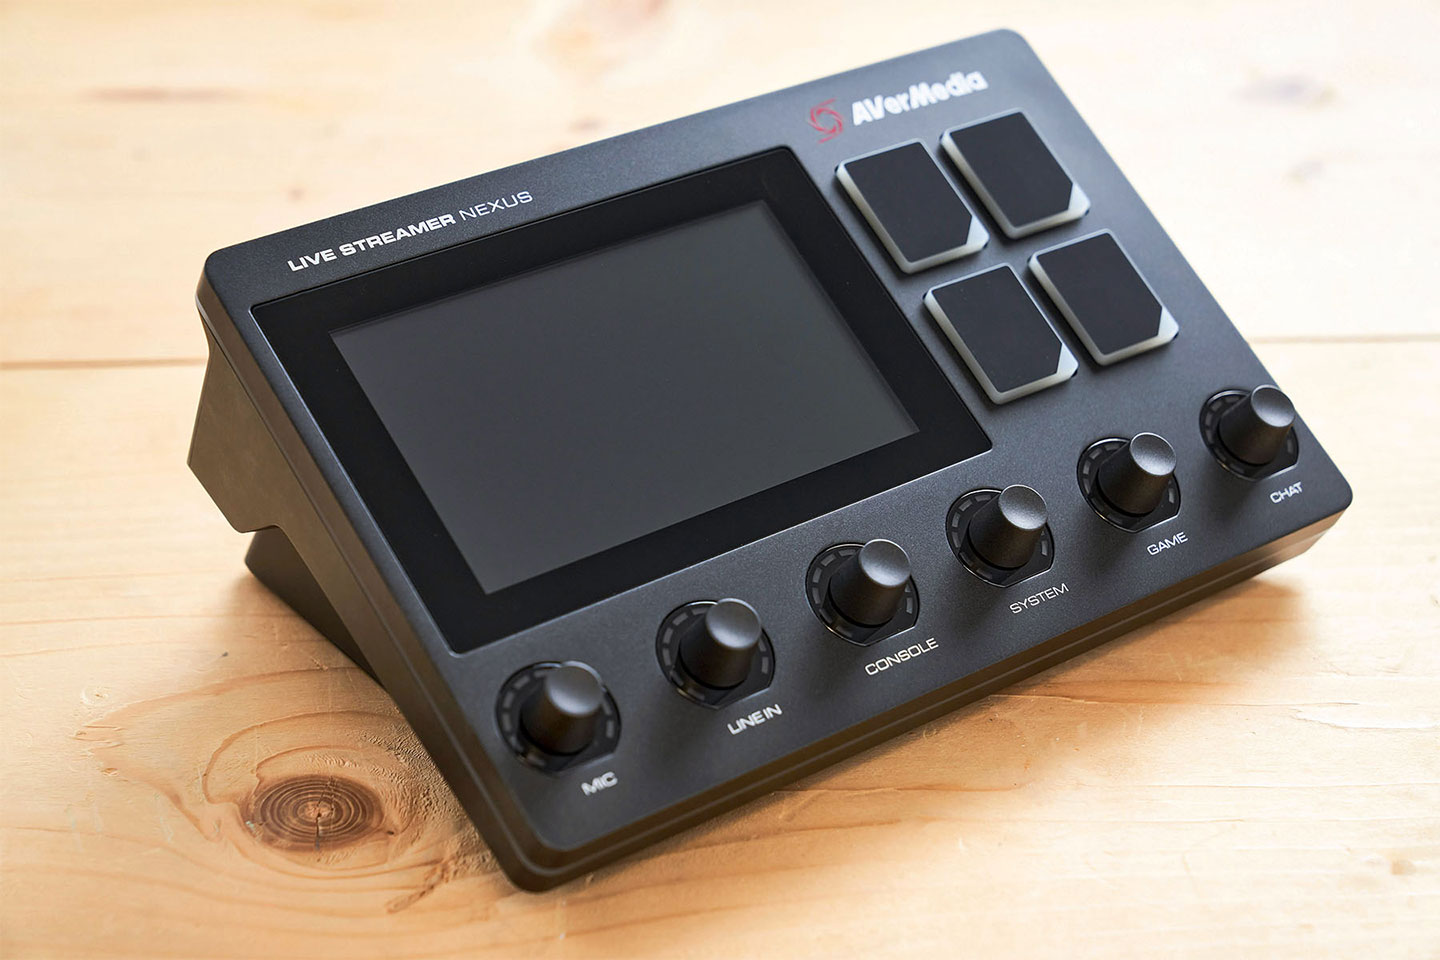 AX310 本體為全黑色霧面塗裝，操控介面集中於正面，包括了一塊 5 吋的全彩觸控螢幕，四個實體功能鍵與六組對於不同音源的音軌旋鈕。